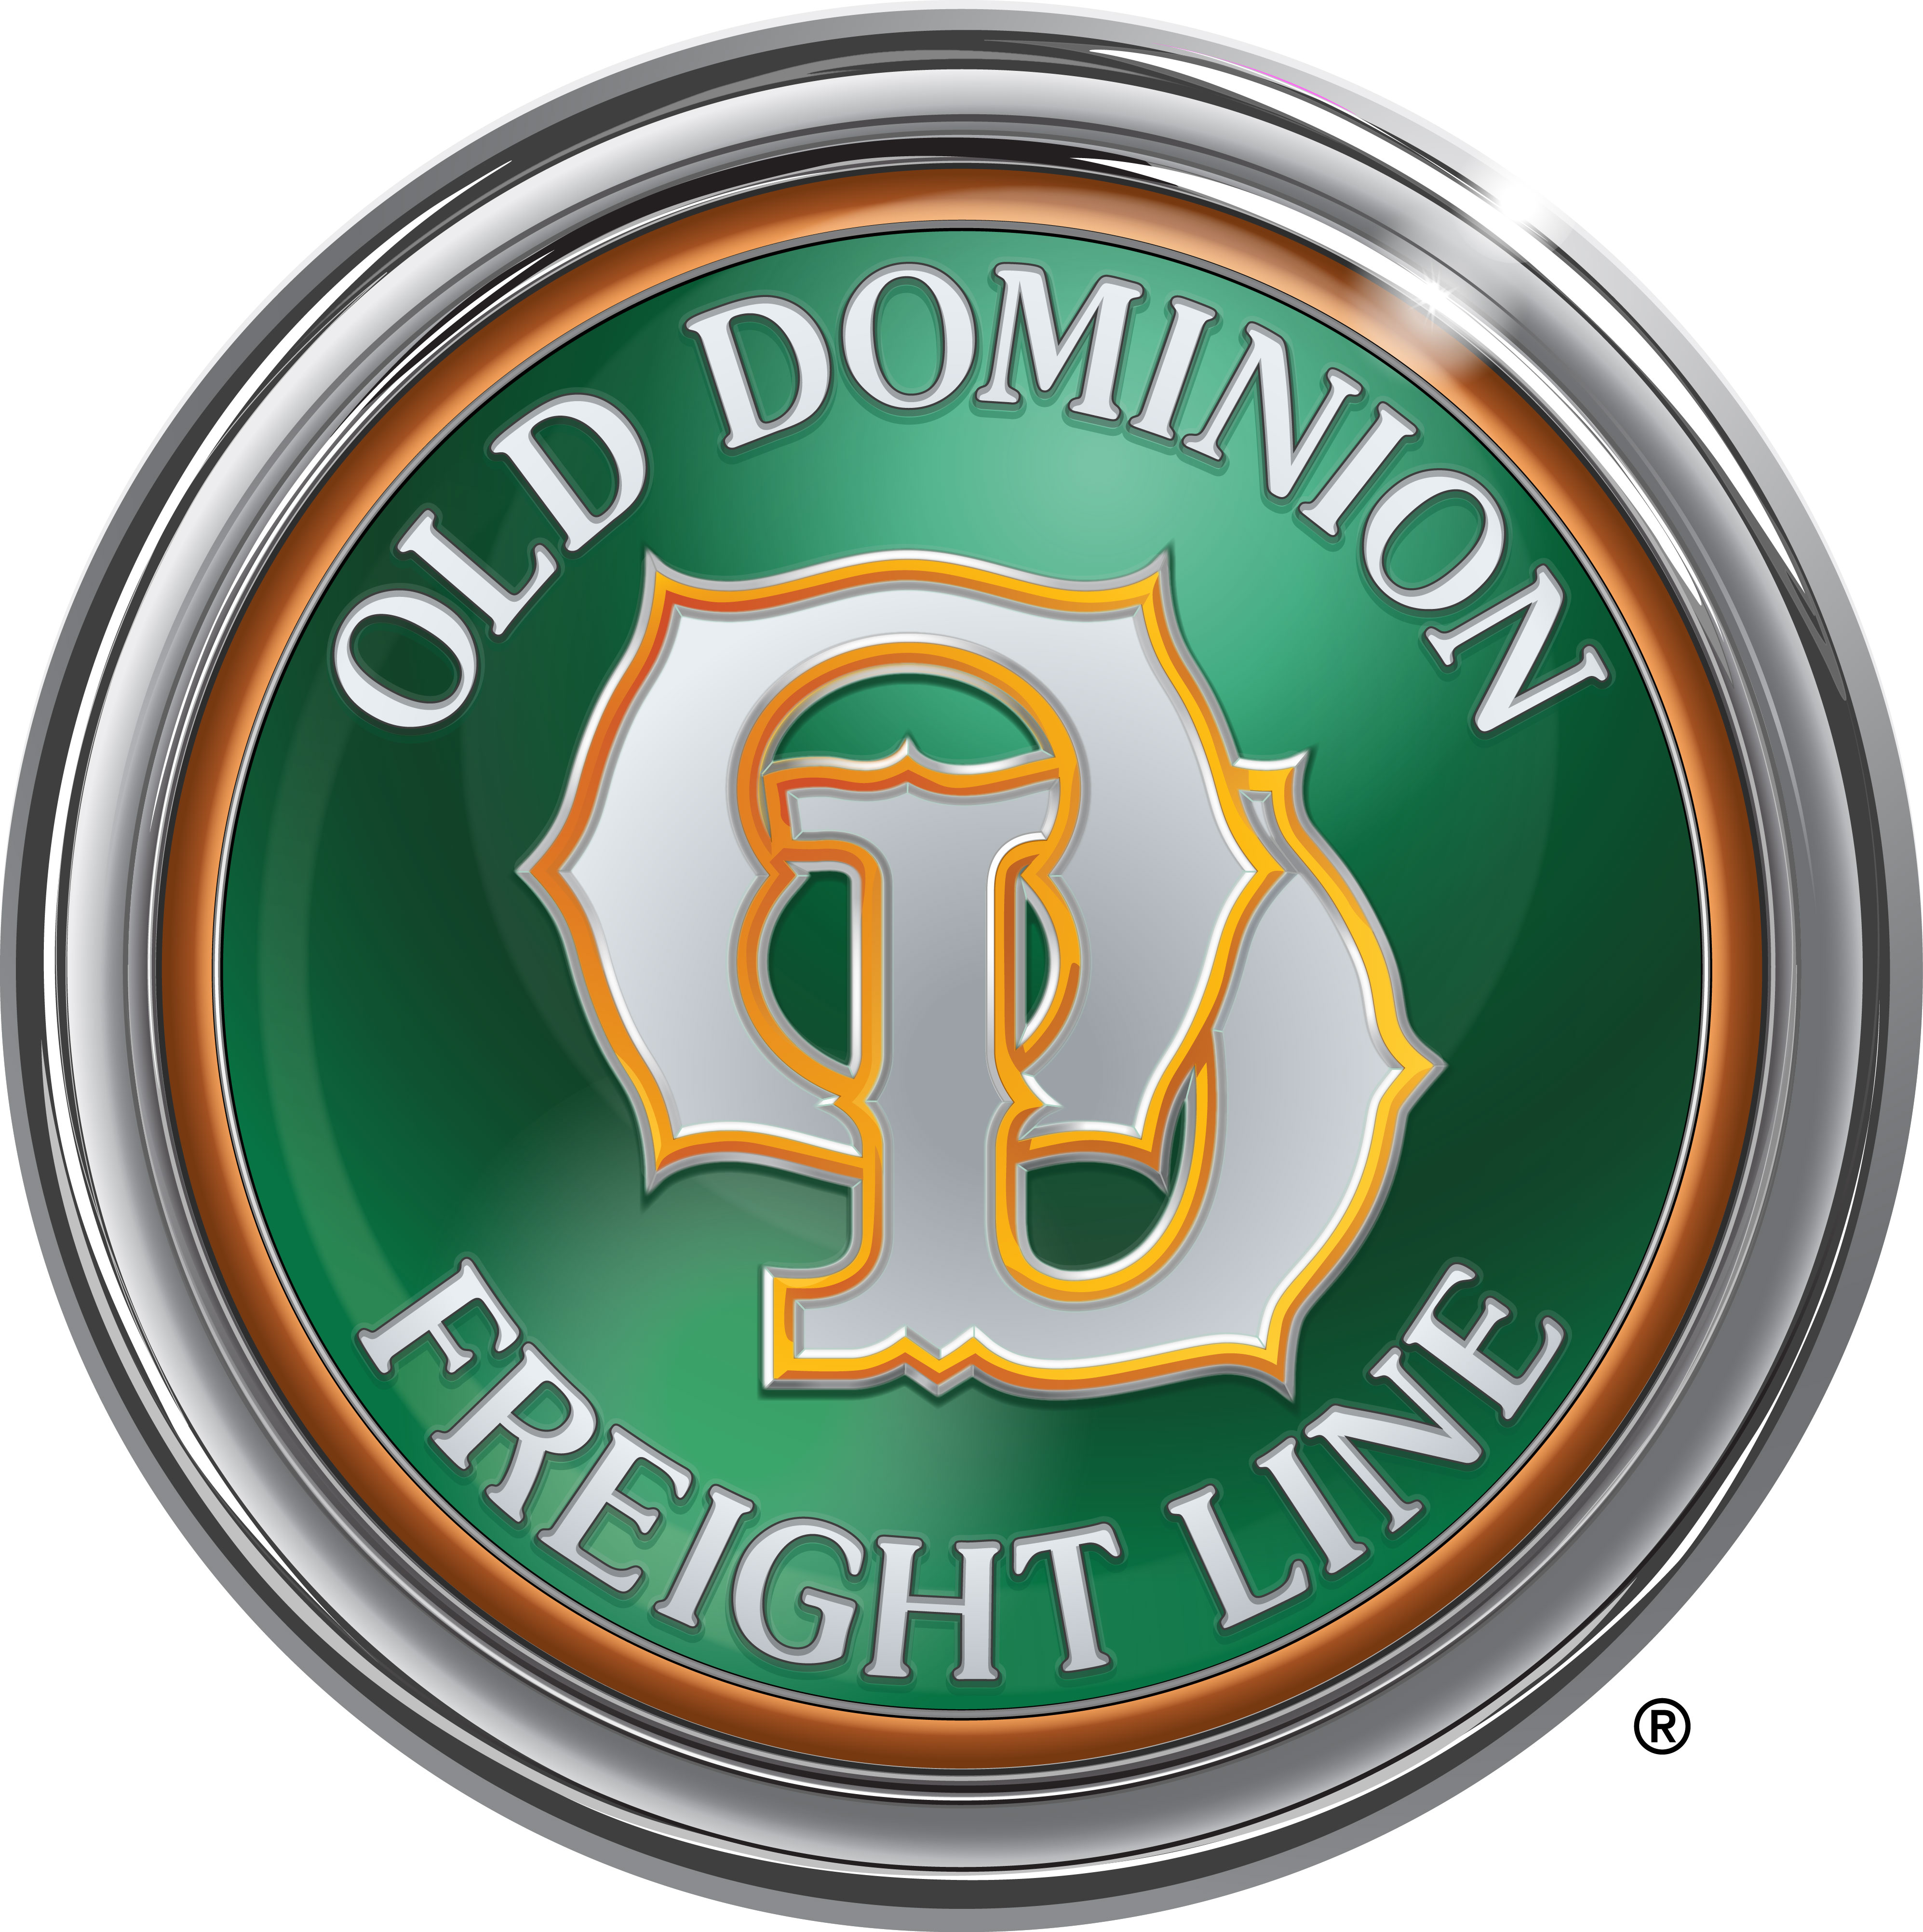 old dominion logo